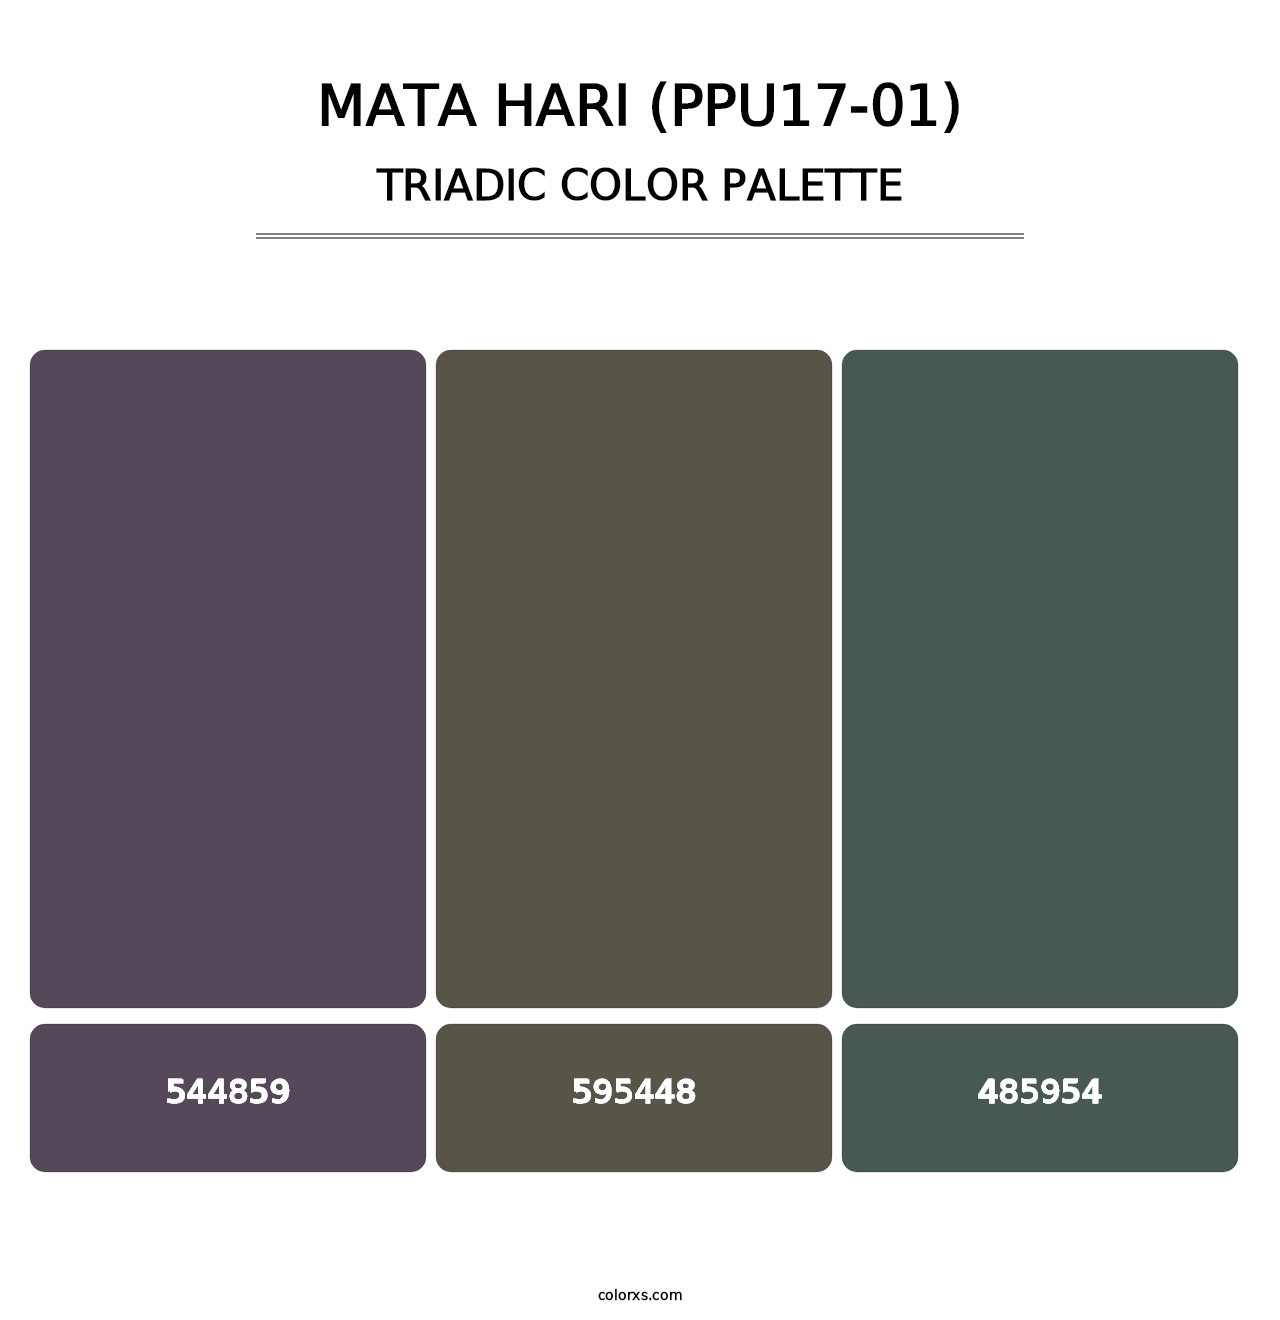 Mata Hari (PPU17-01) - Triadic Color Palette